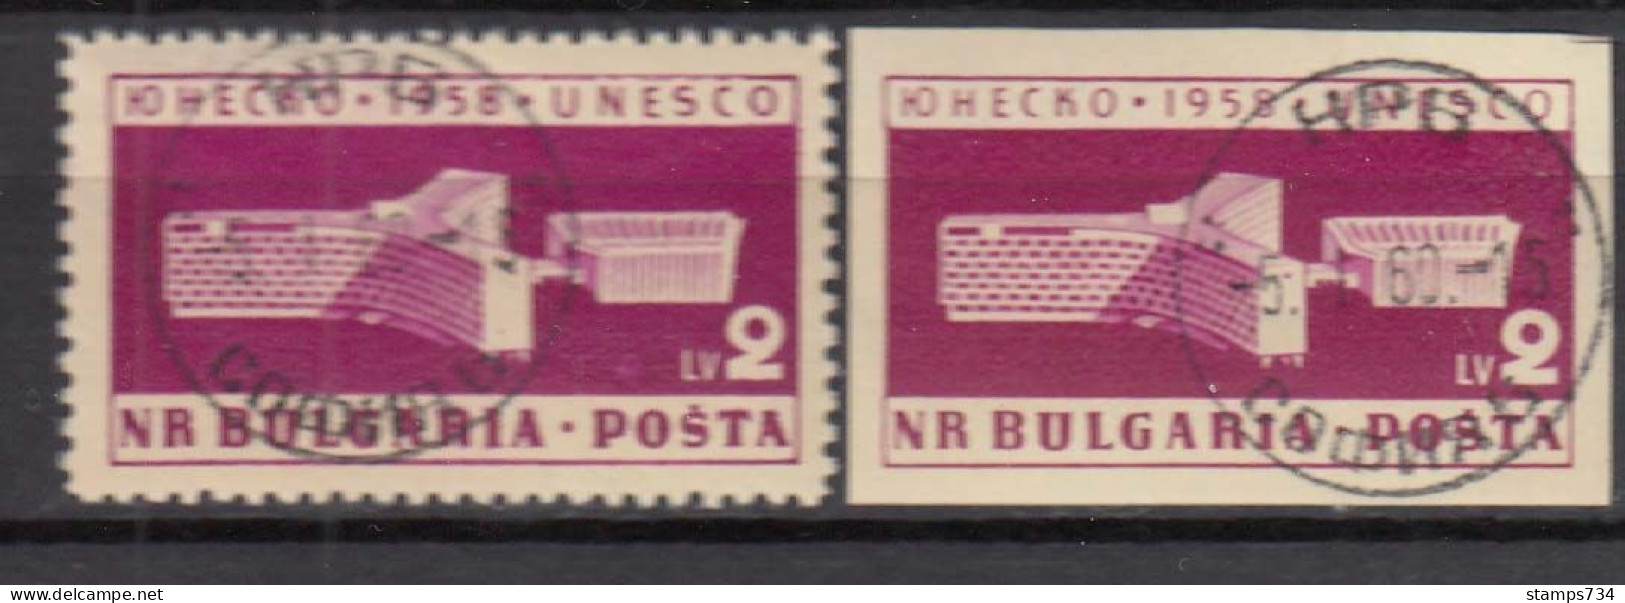 Bulgaria 1959 - UNESCO, Mi-Nr. 1103 A+B, Used - Gebruikt